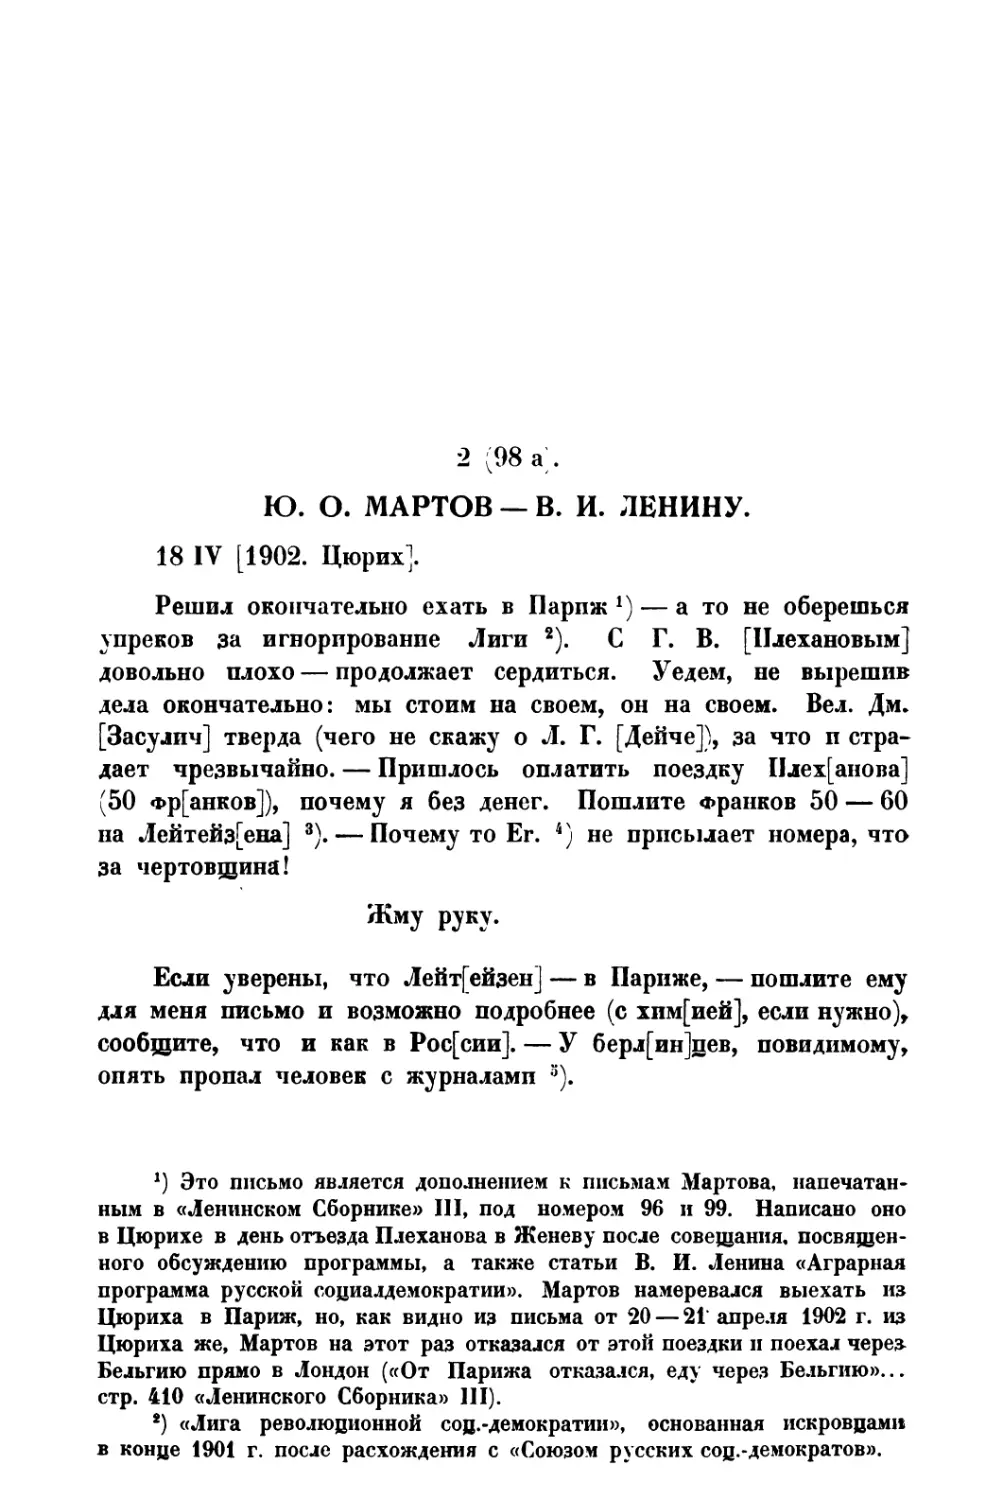 2. Ю. О. Мартов — В. И. Ленину от 18 IV 1902 г